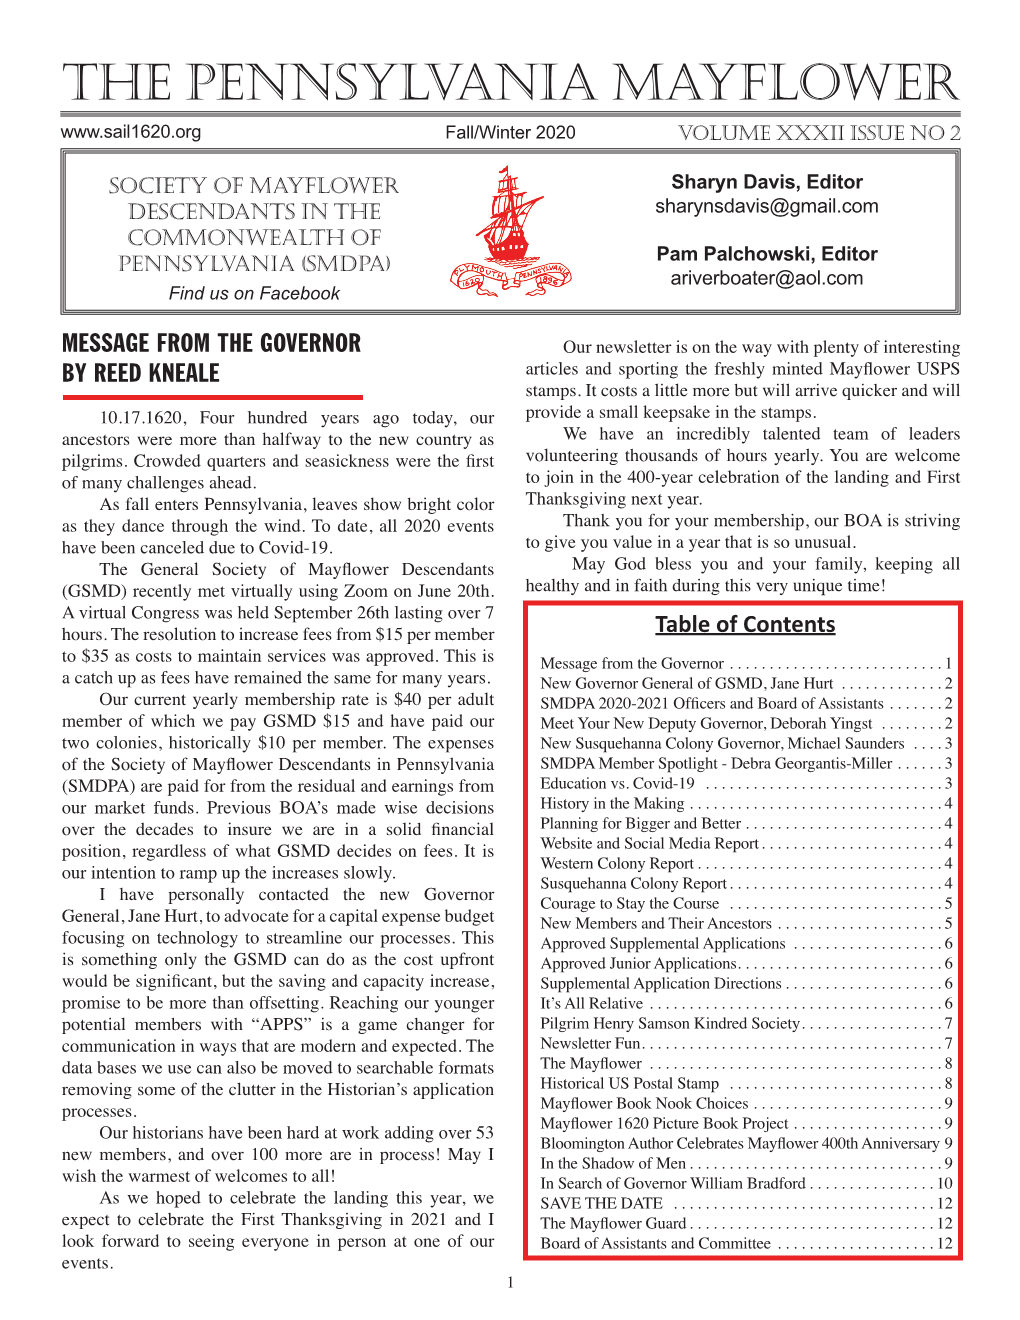 The Pennsylvania Mayflower Fall/Winter 2020 Volume XXXII Issue No 2